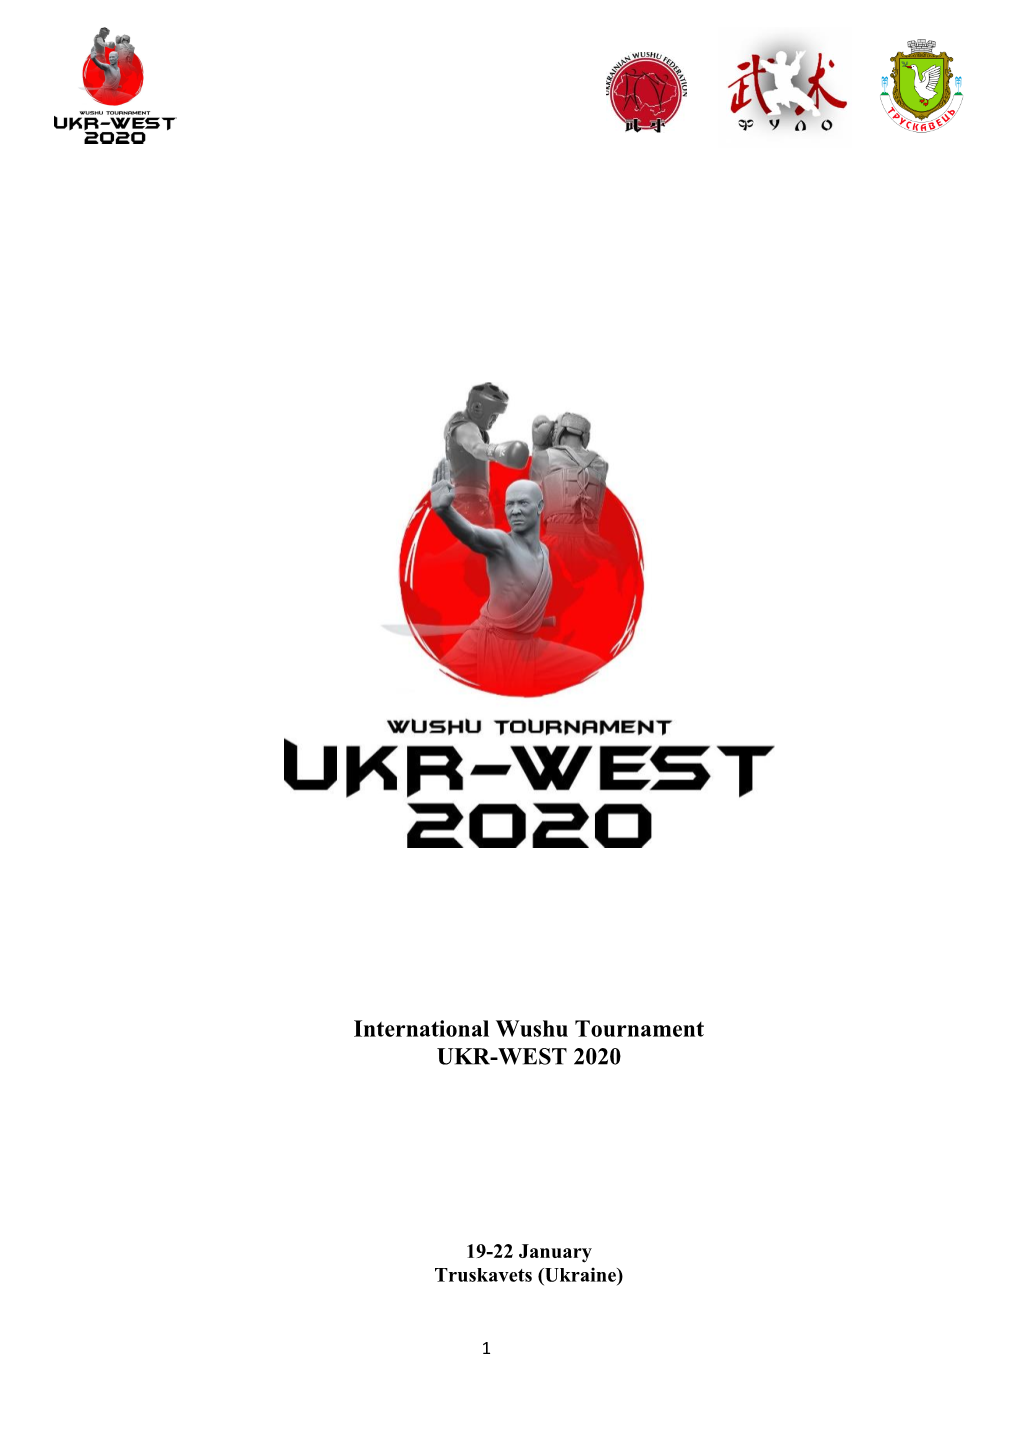 International Wushu Tournament UKR-WEST 2020